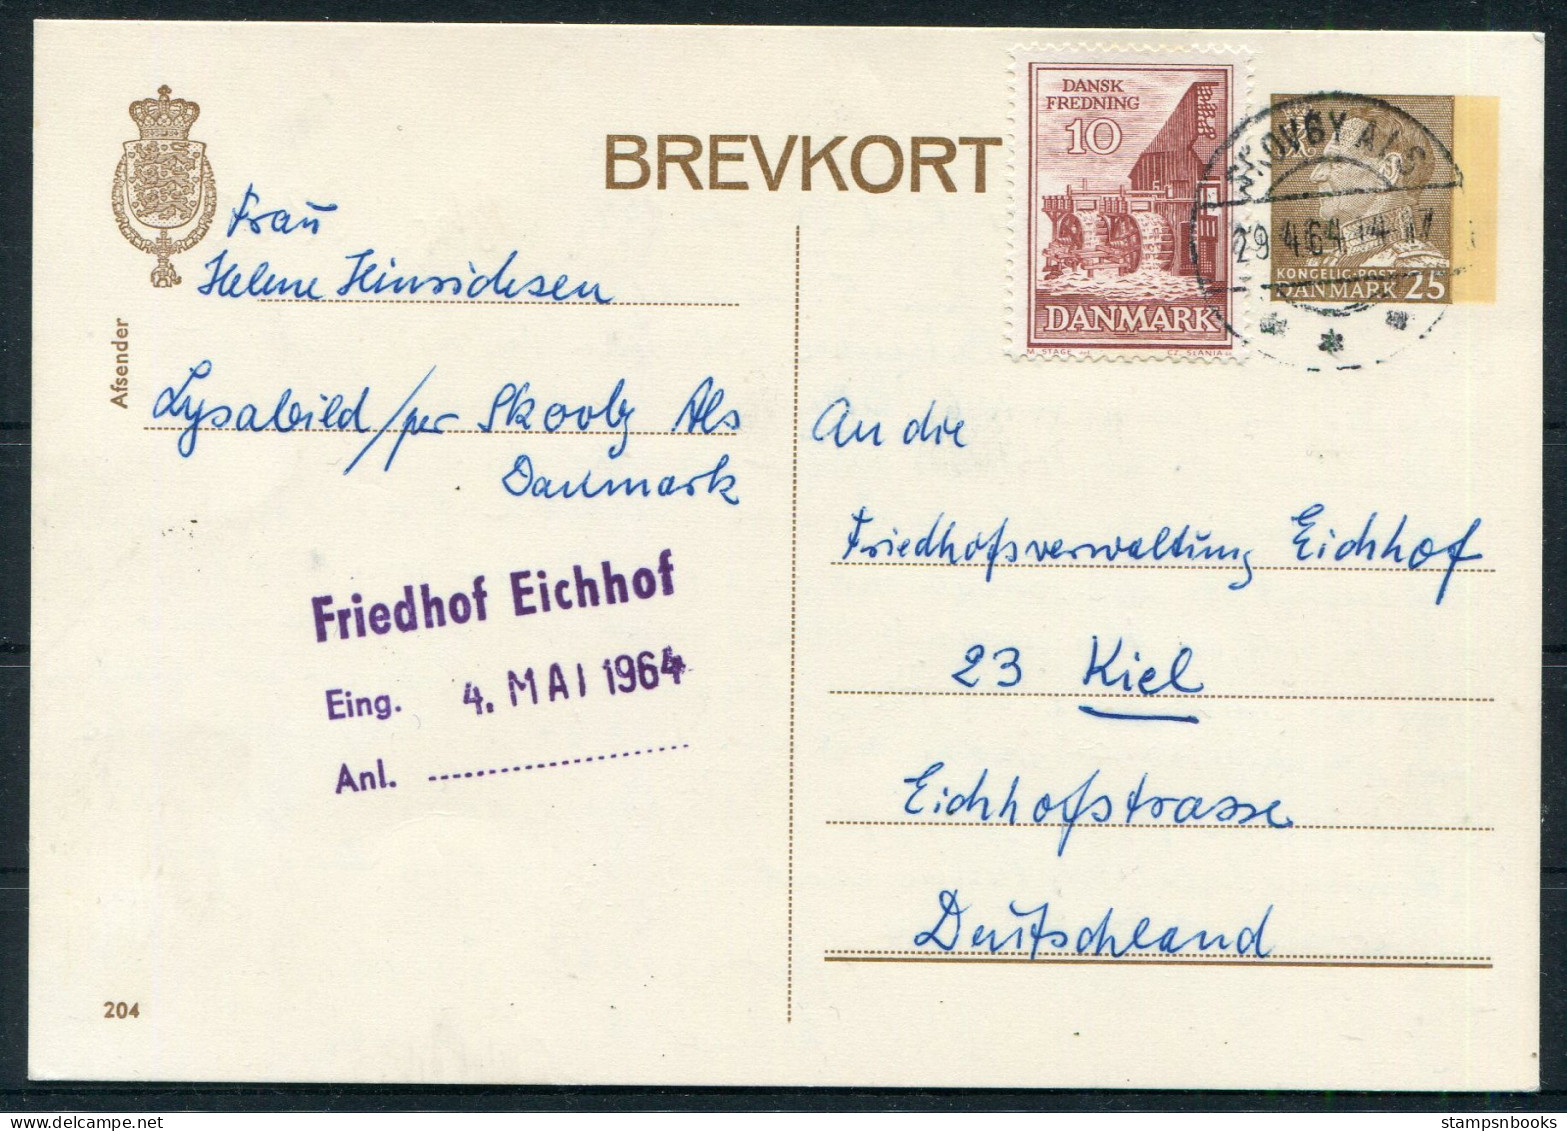 1964 Denmark Uprated 25ore Stationery Postcard (204) Skovby Als - Friedhof Eichhof Cemetery Kiel Germany - Covers & Documents